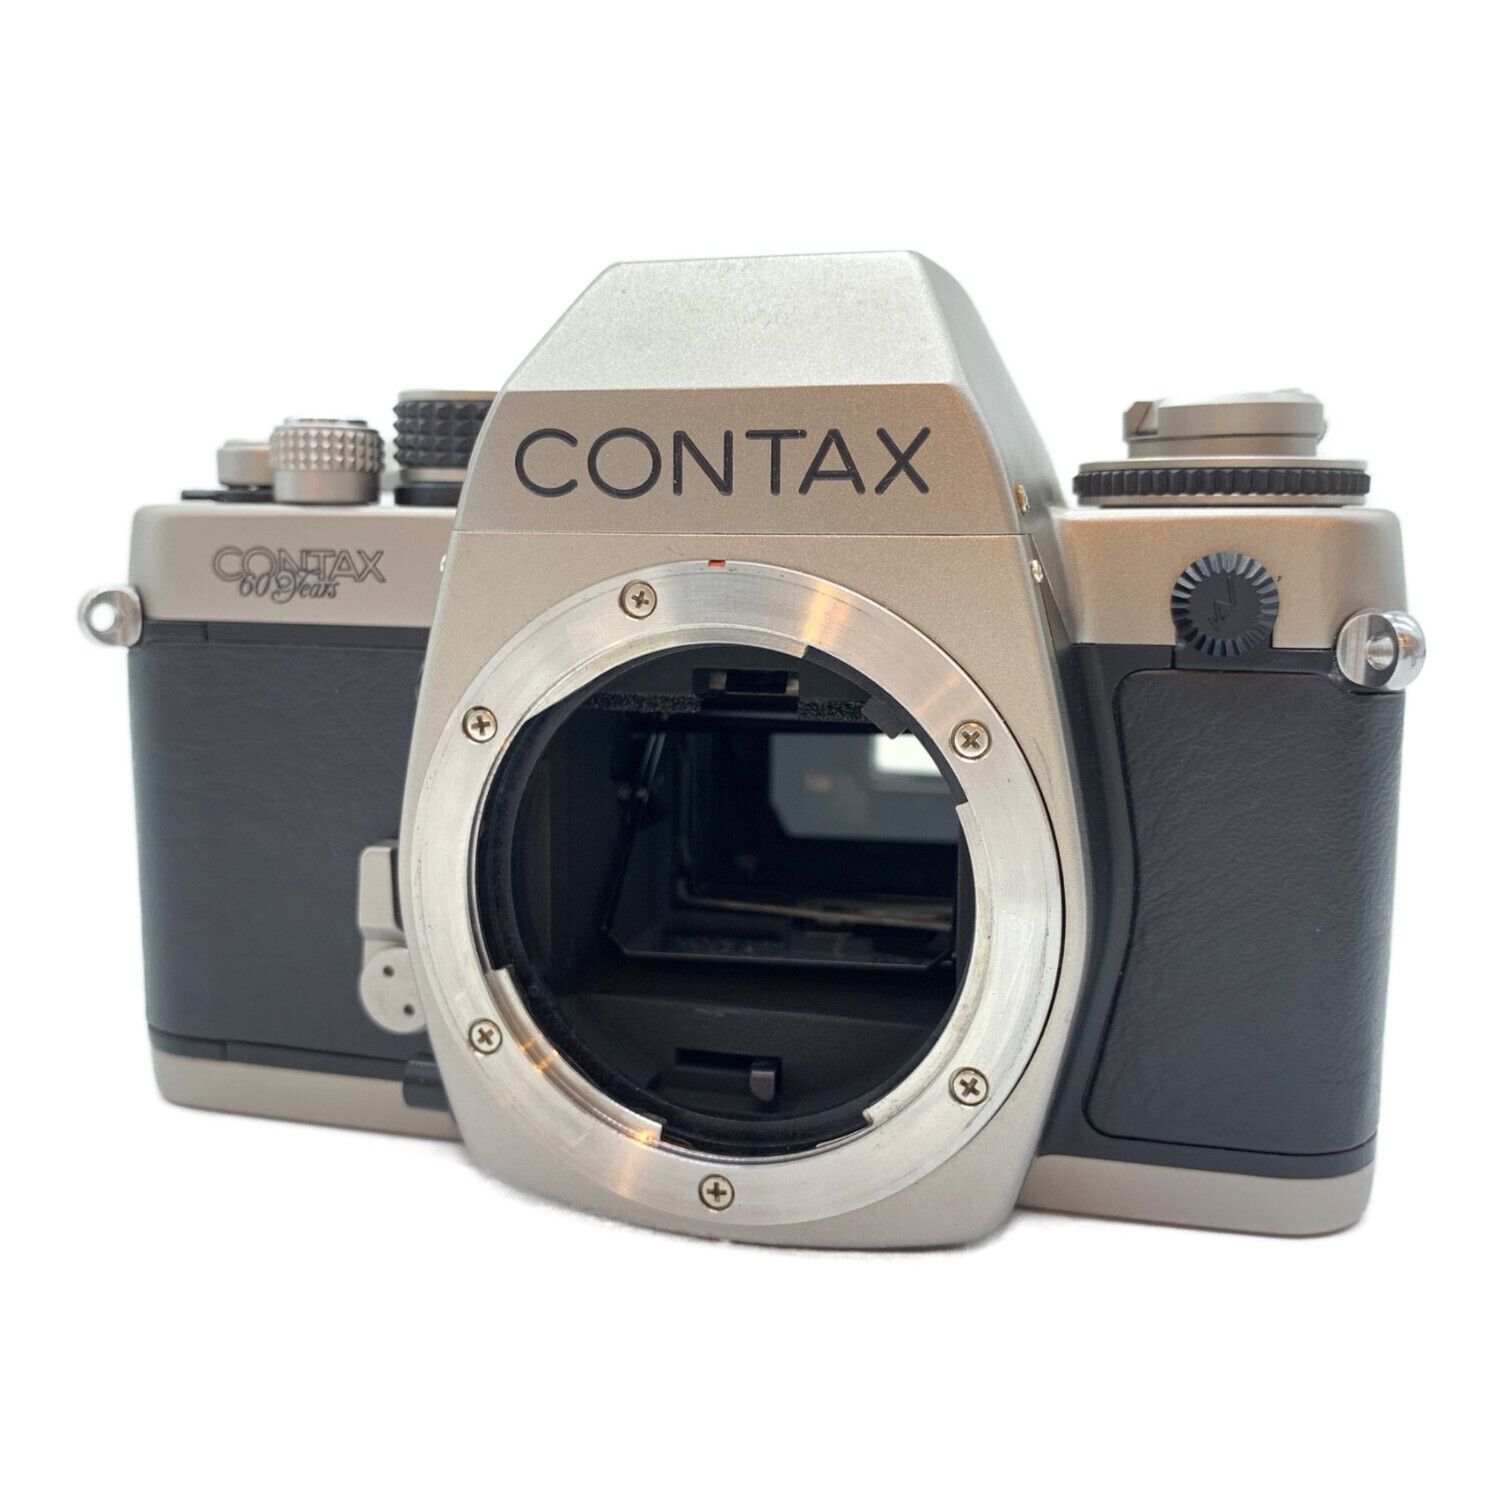 CONTAX (コンタックス) フィルムカメラ 60周年記念モデル S2 004244